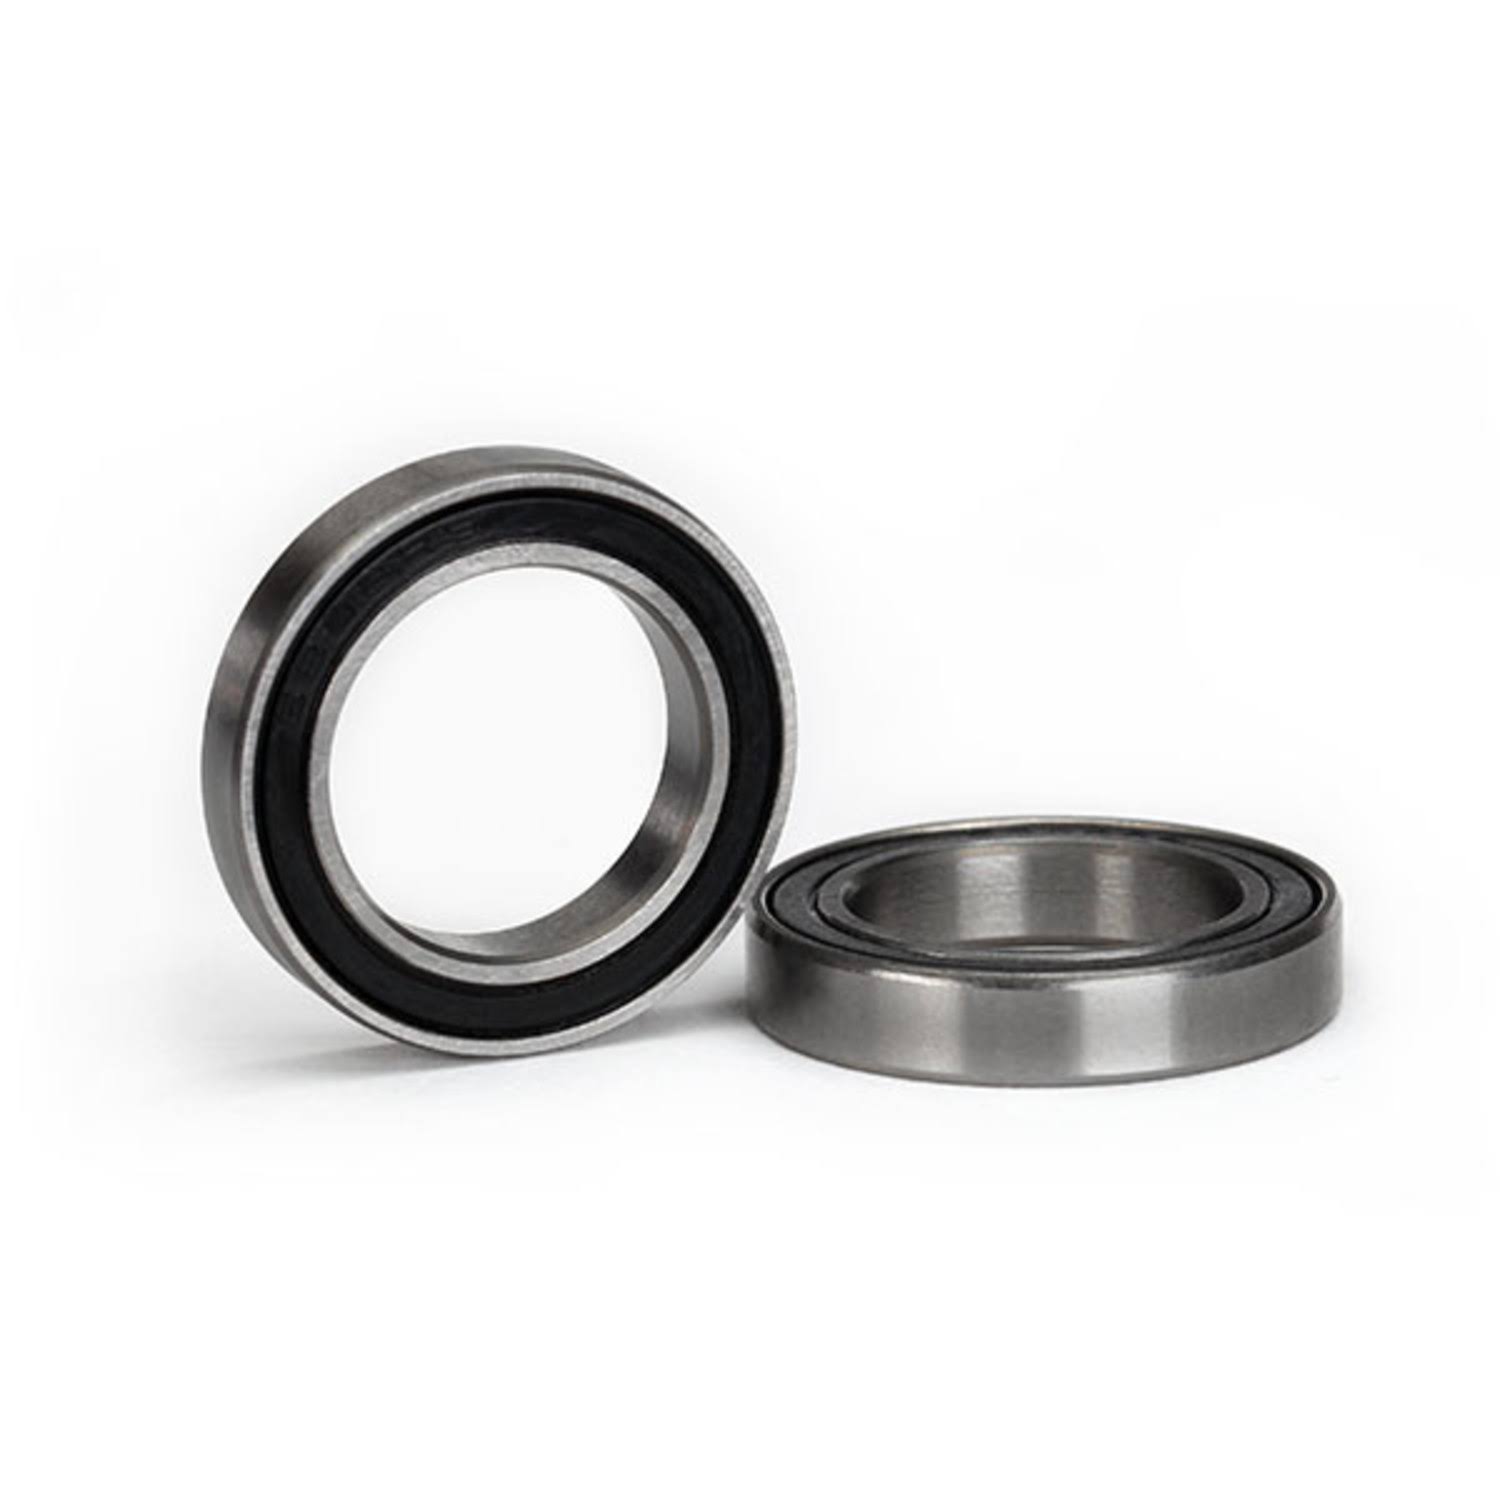 Traxxas TRX5107A Ball bearing, Black Rubber seal (17x26x5mm) (2)